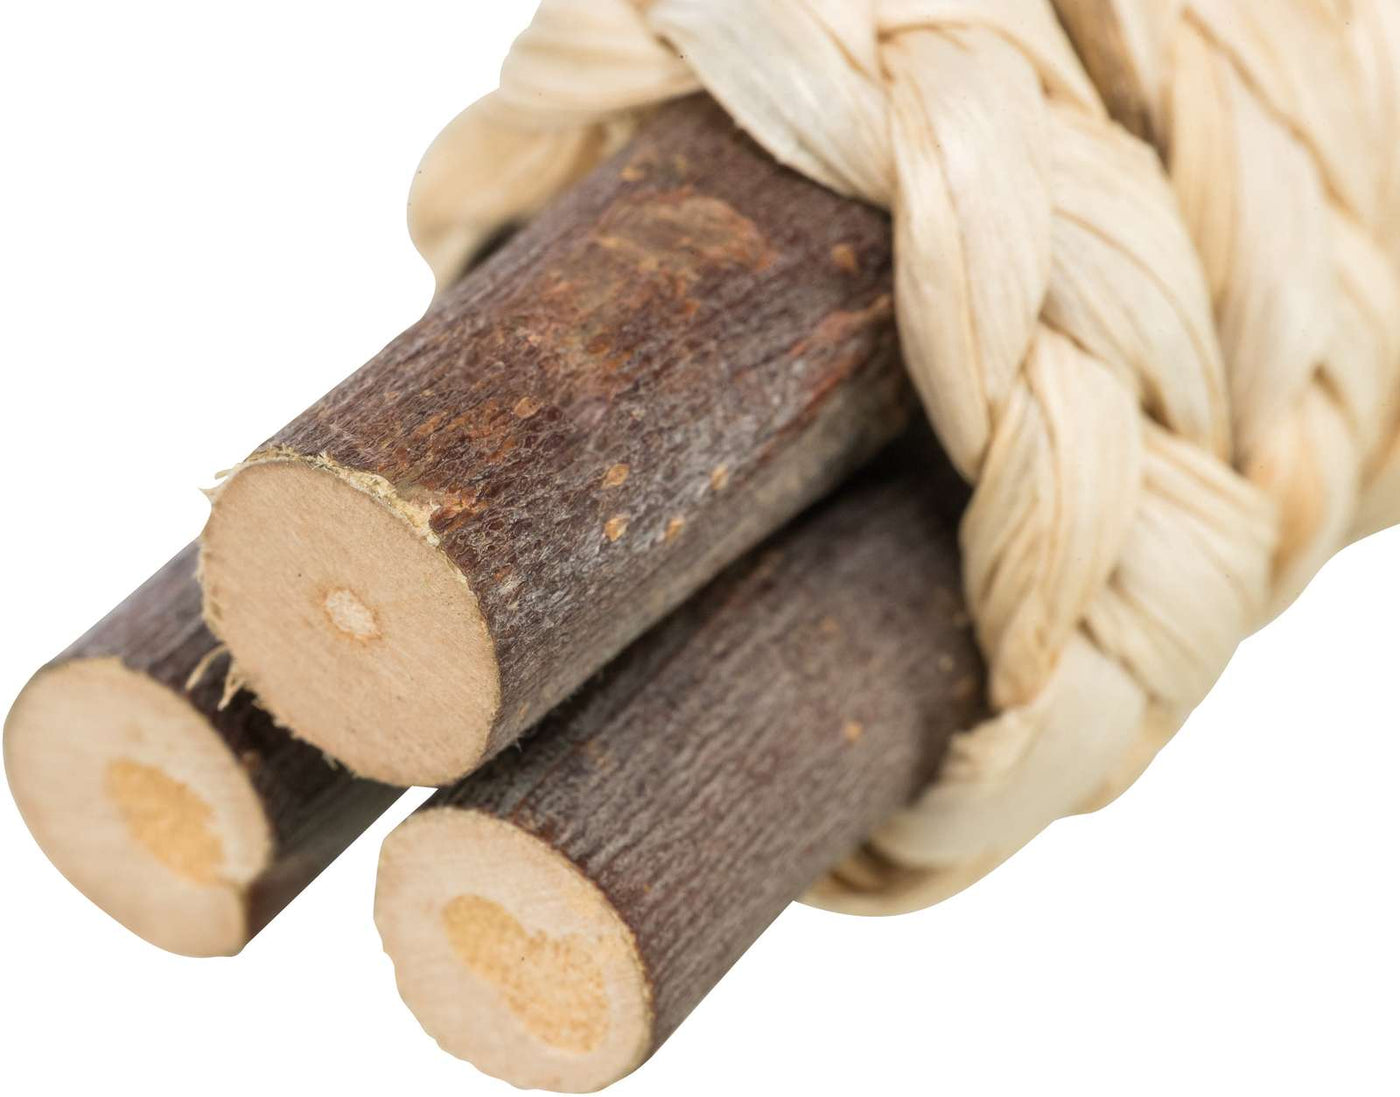 Wooden Sticks With Straw